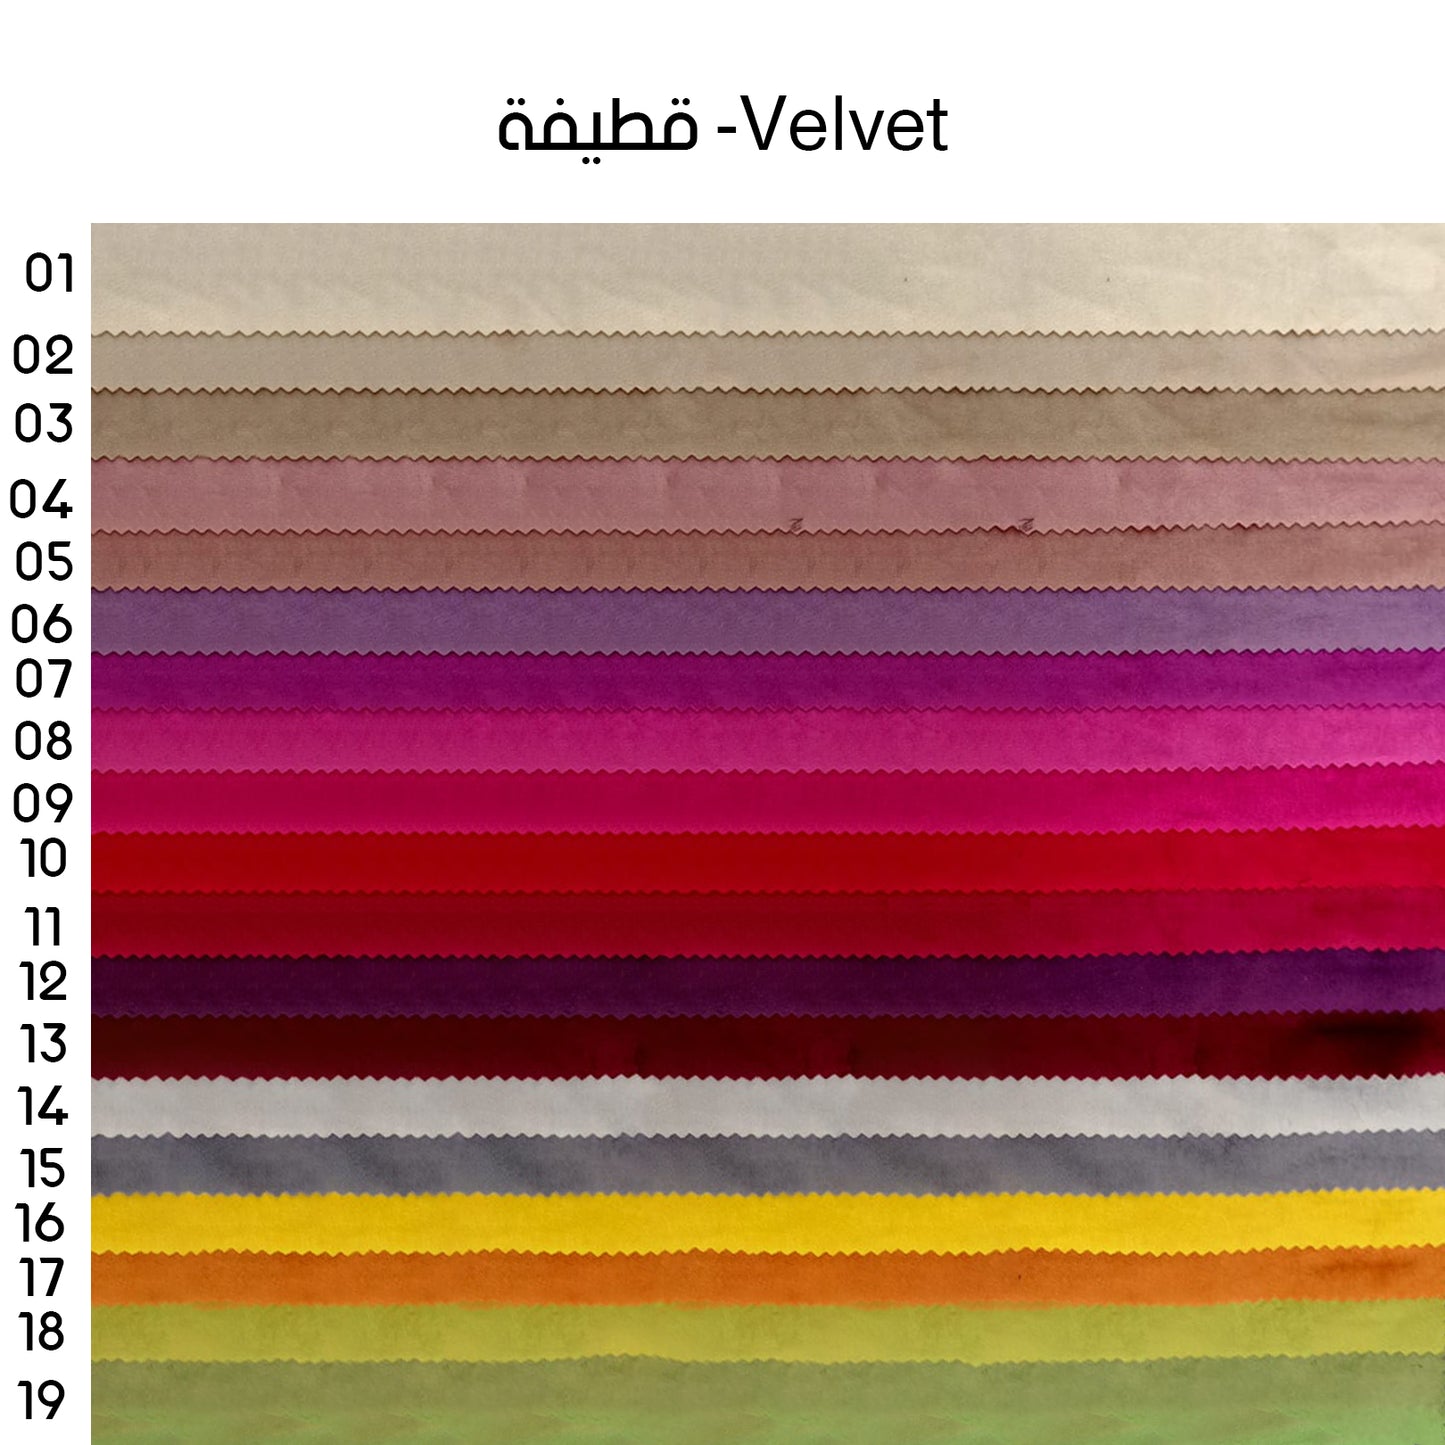 Sofa beech wood 85x200 cm - multiple colors - DECO24